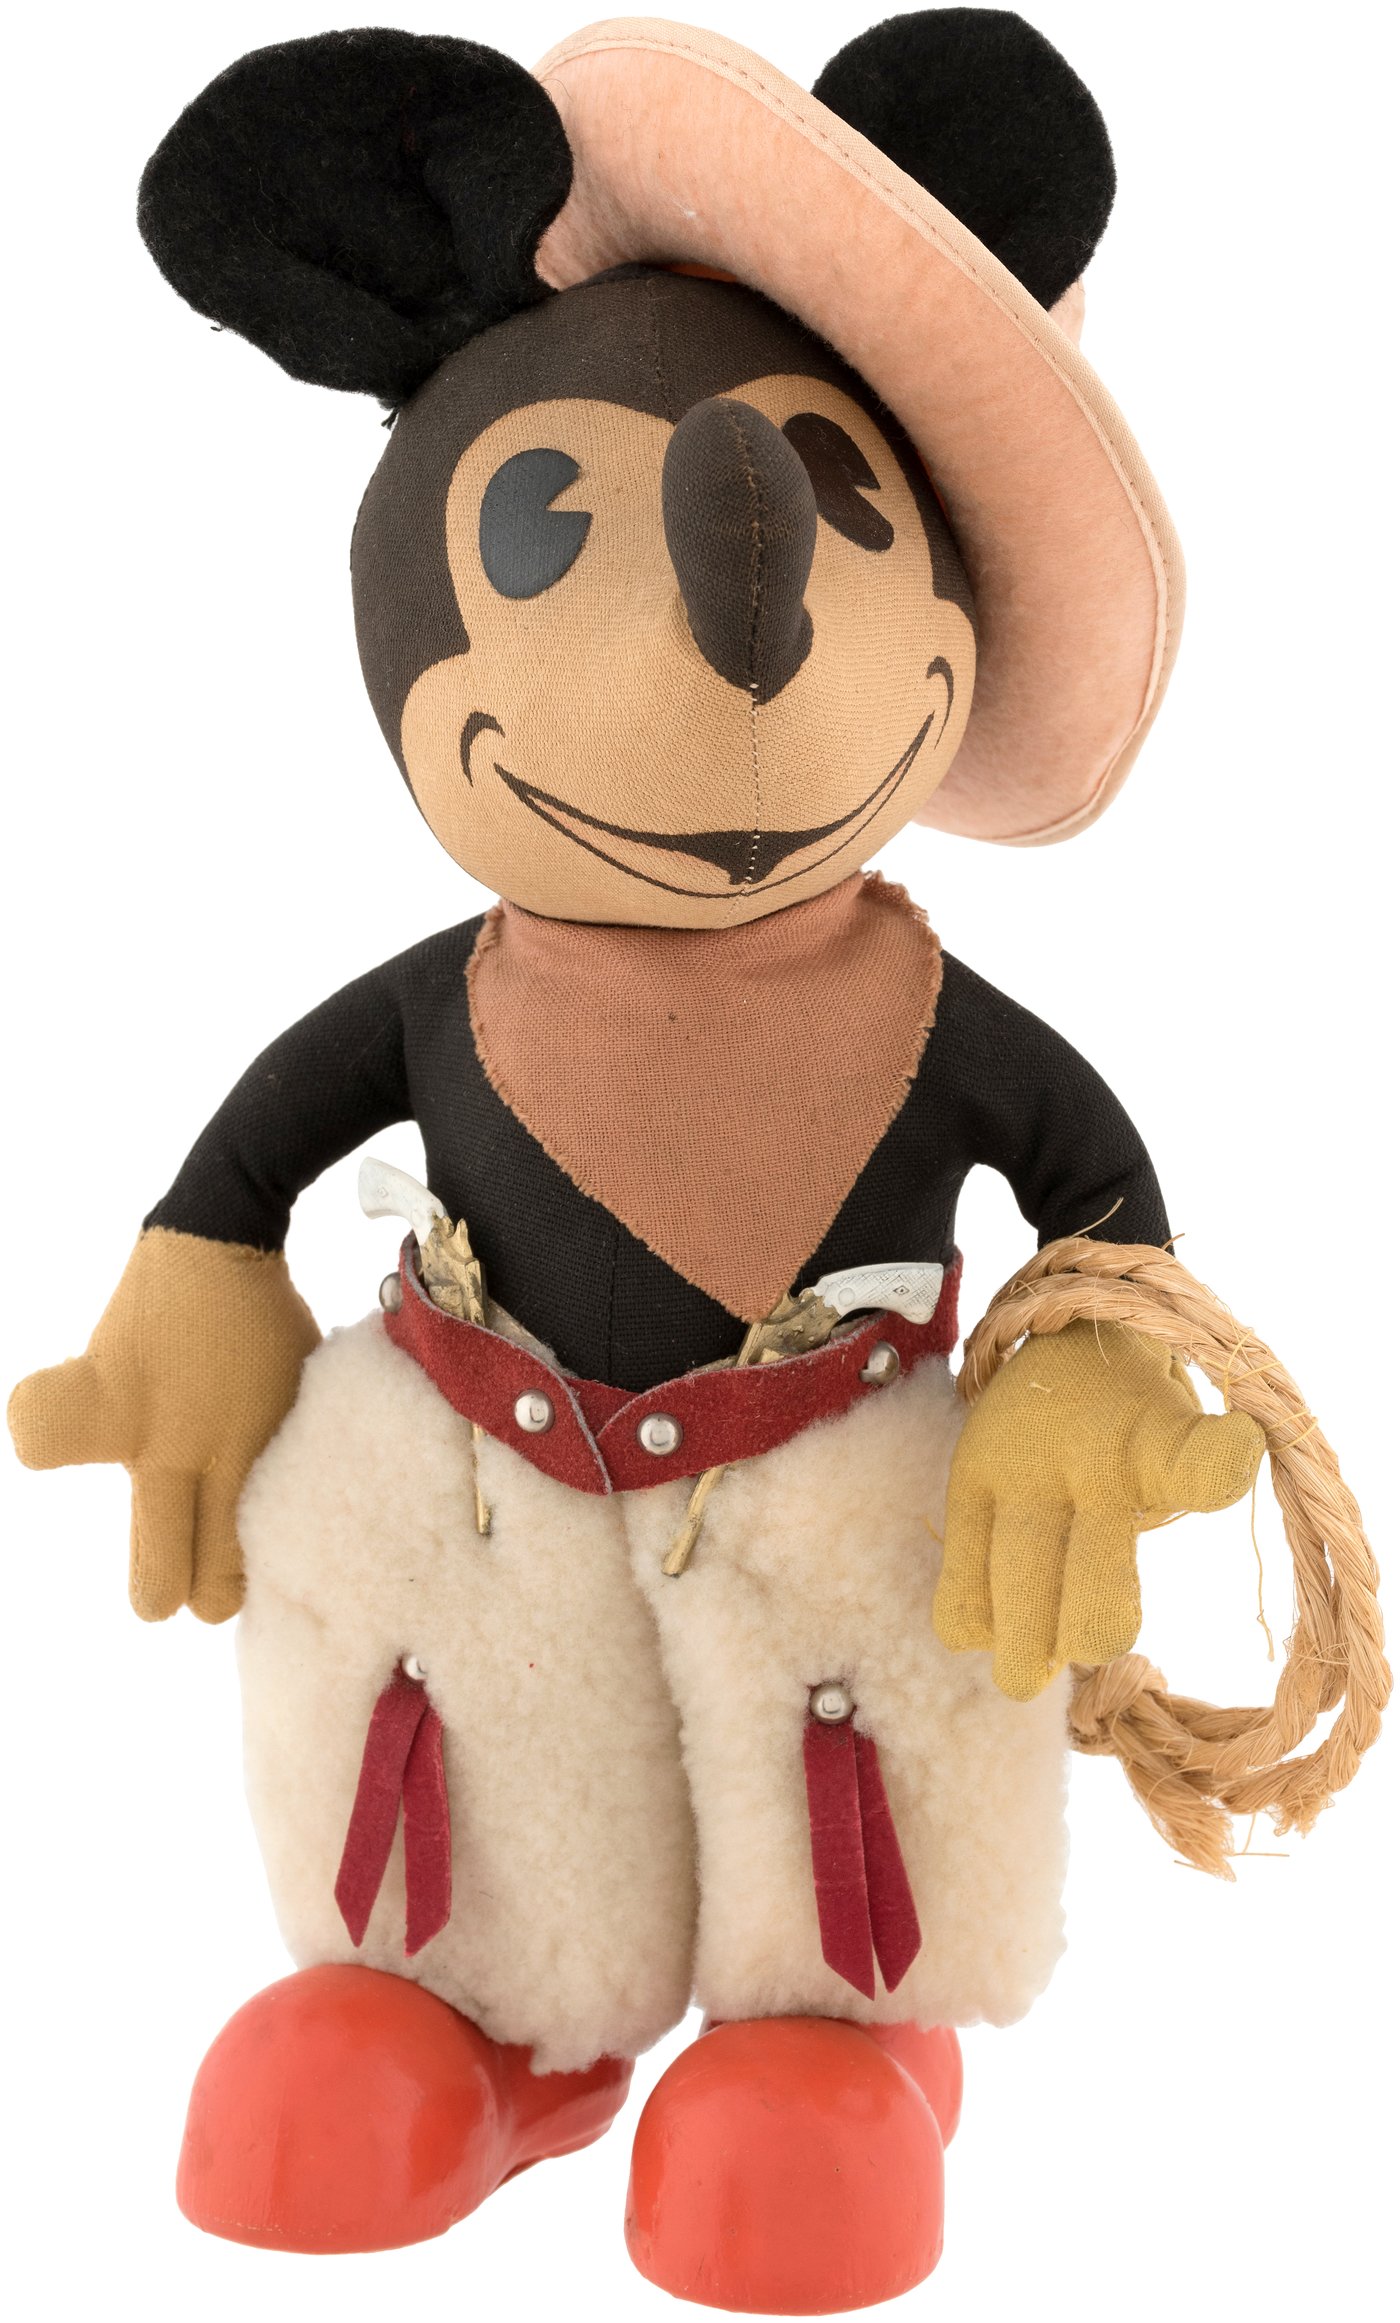 cowboy mickey mouse stuffed animal